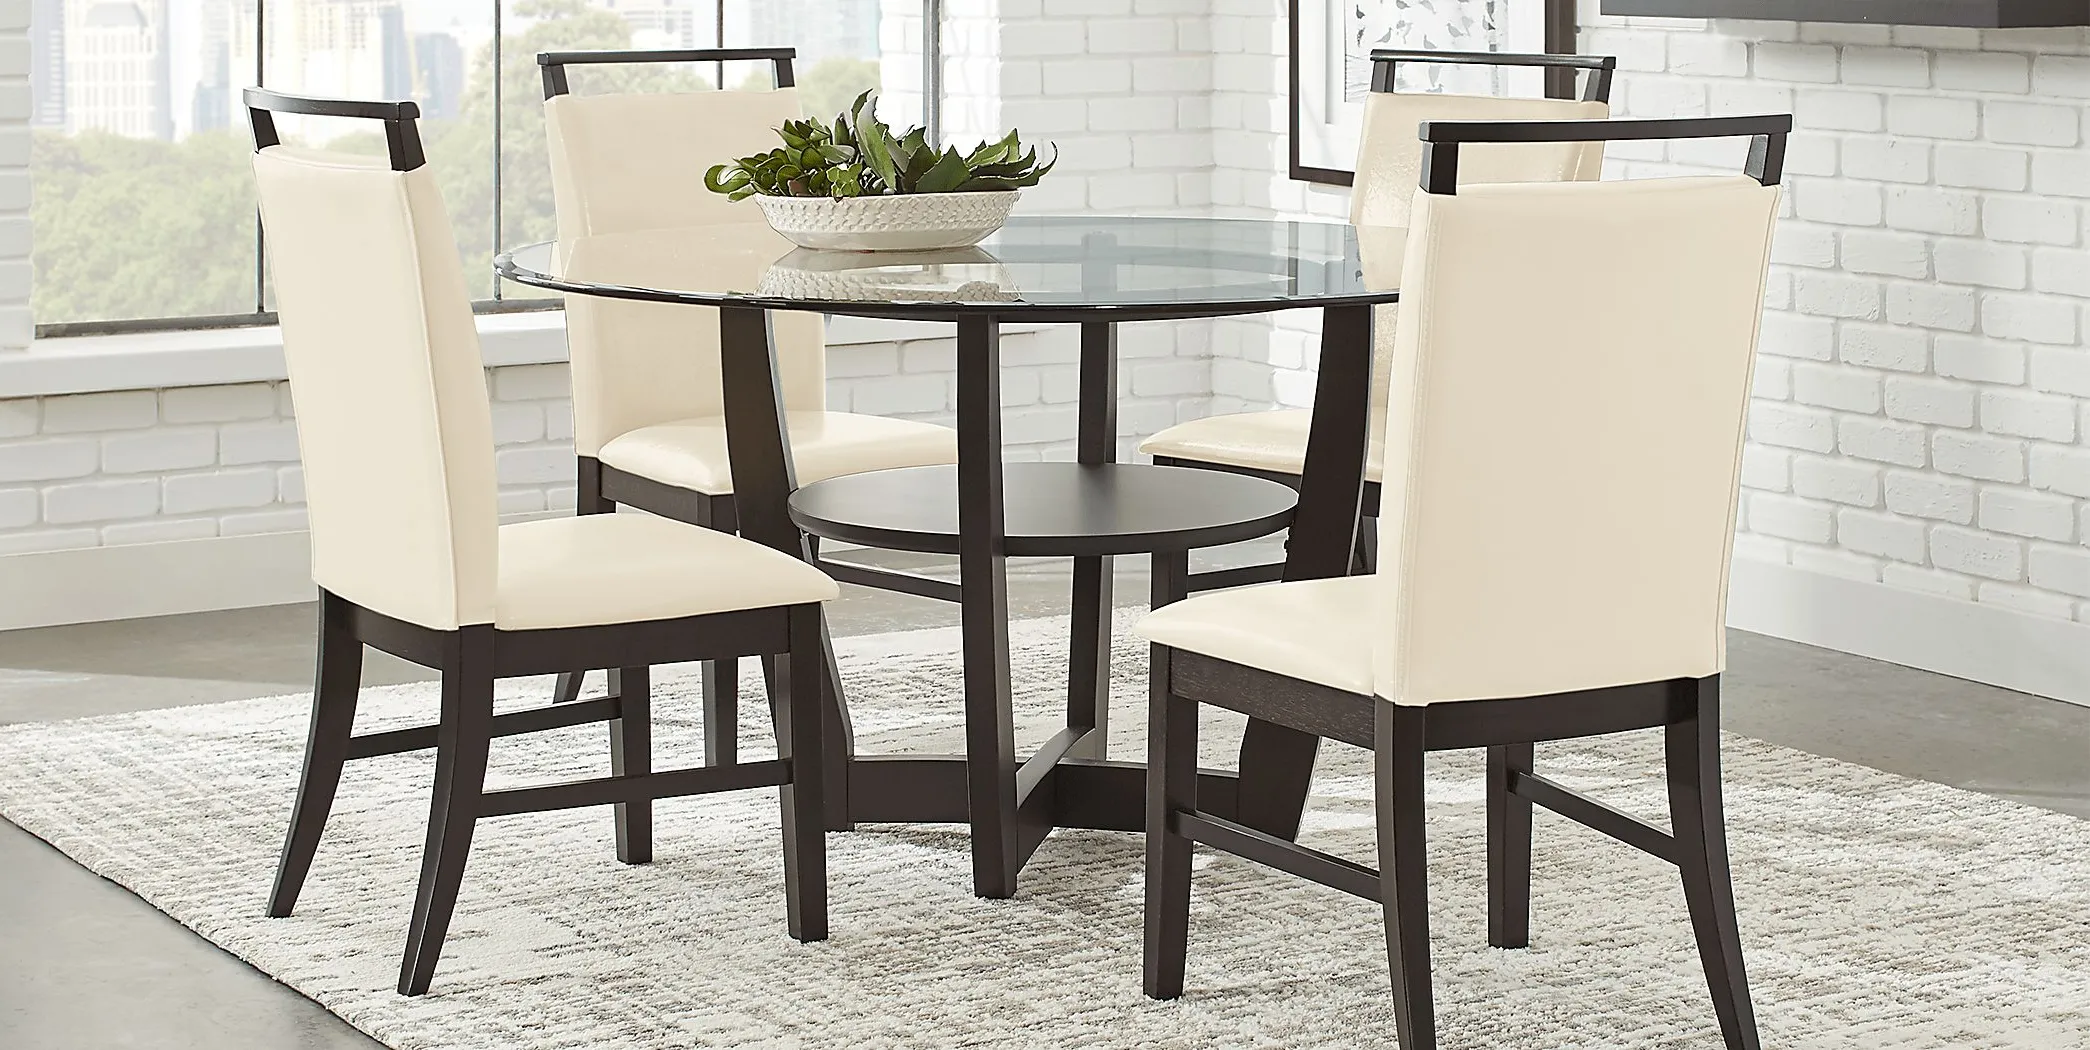 Ciara Espresso 5 Pc 48"" Round Dining Set with Cream Chairs